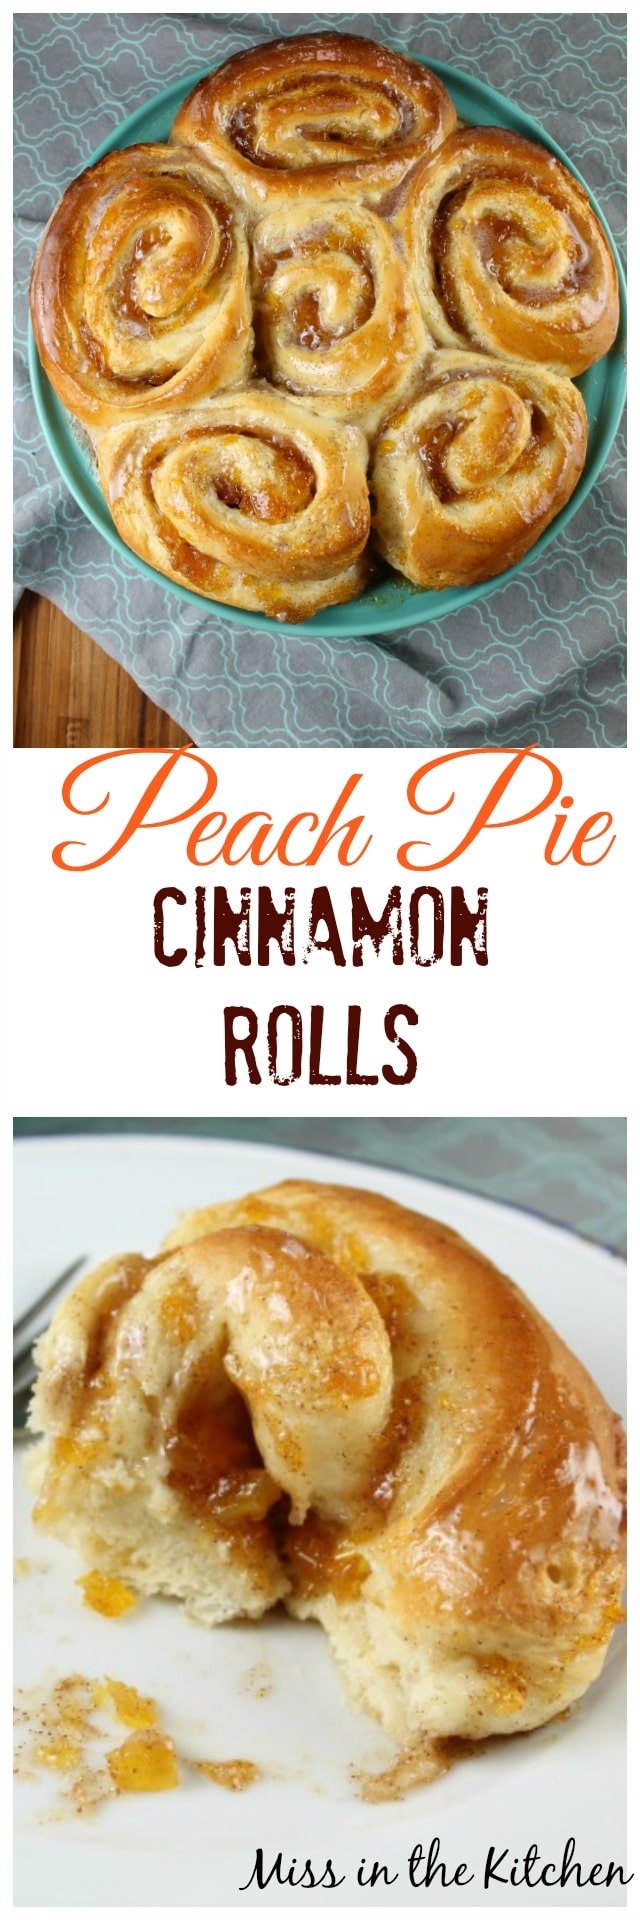 Peach Pie Cinnamon Rolls Recipe from MissintheKitchen.com